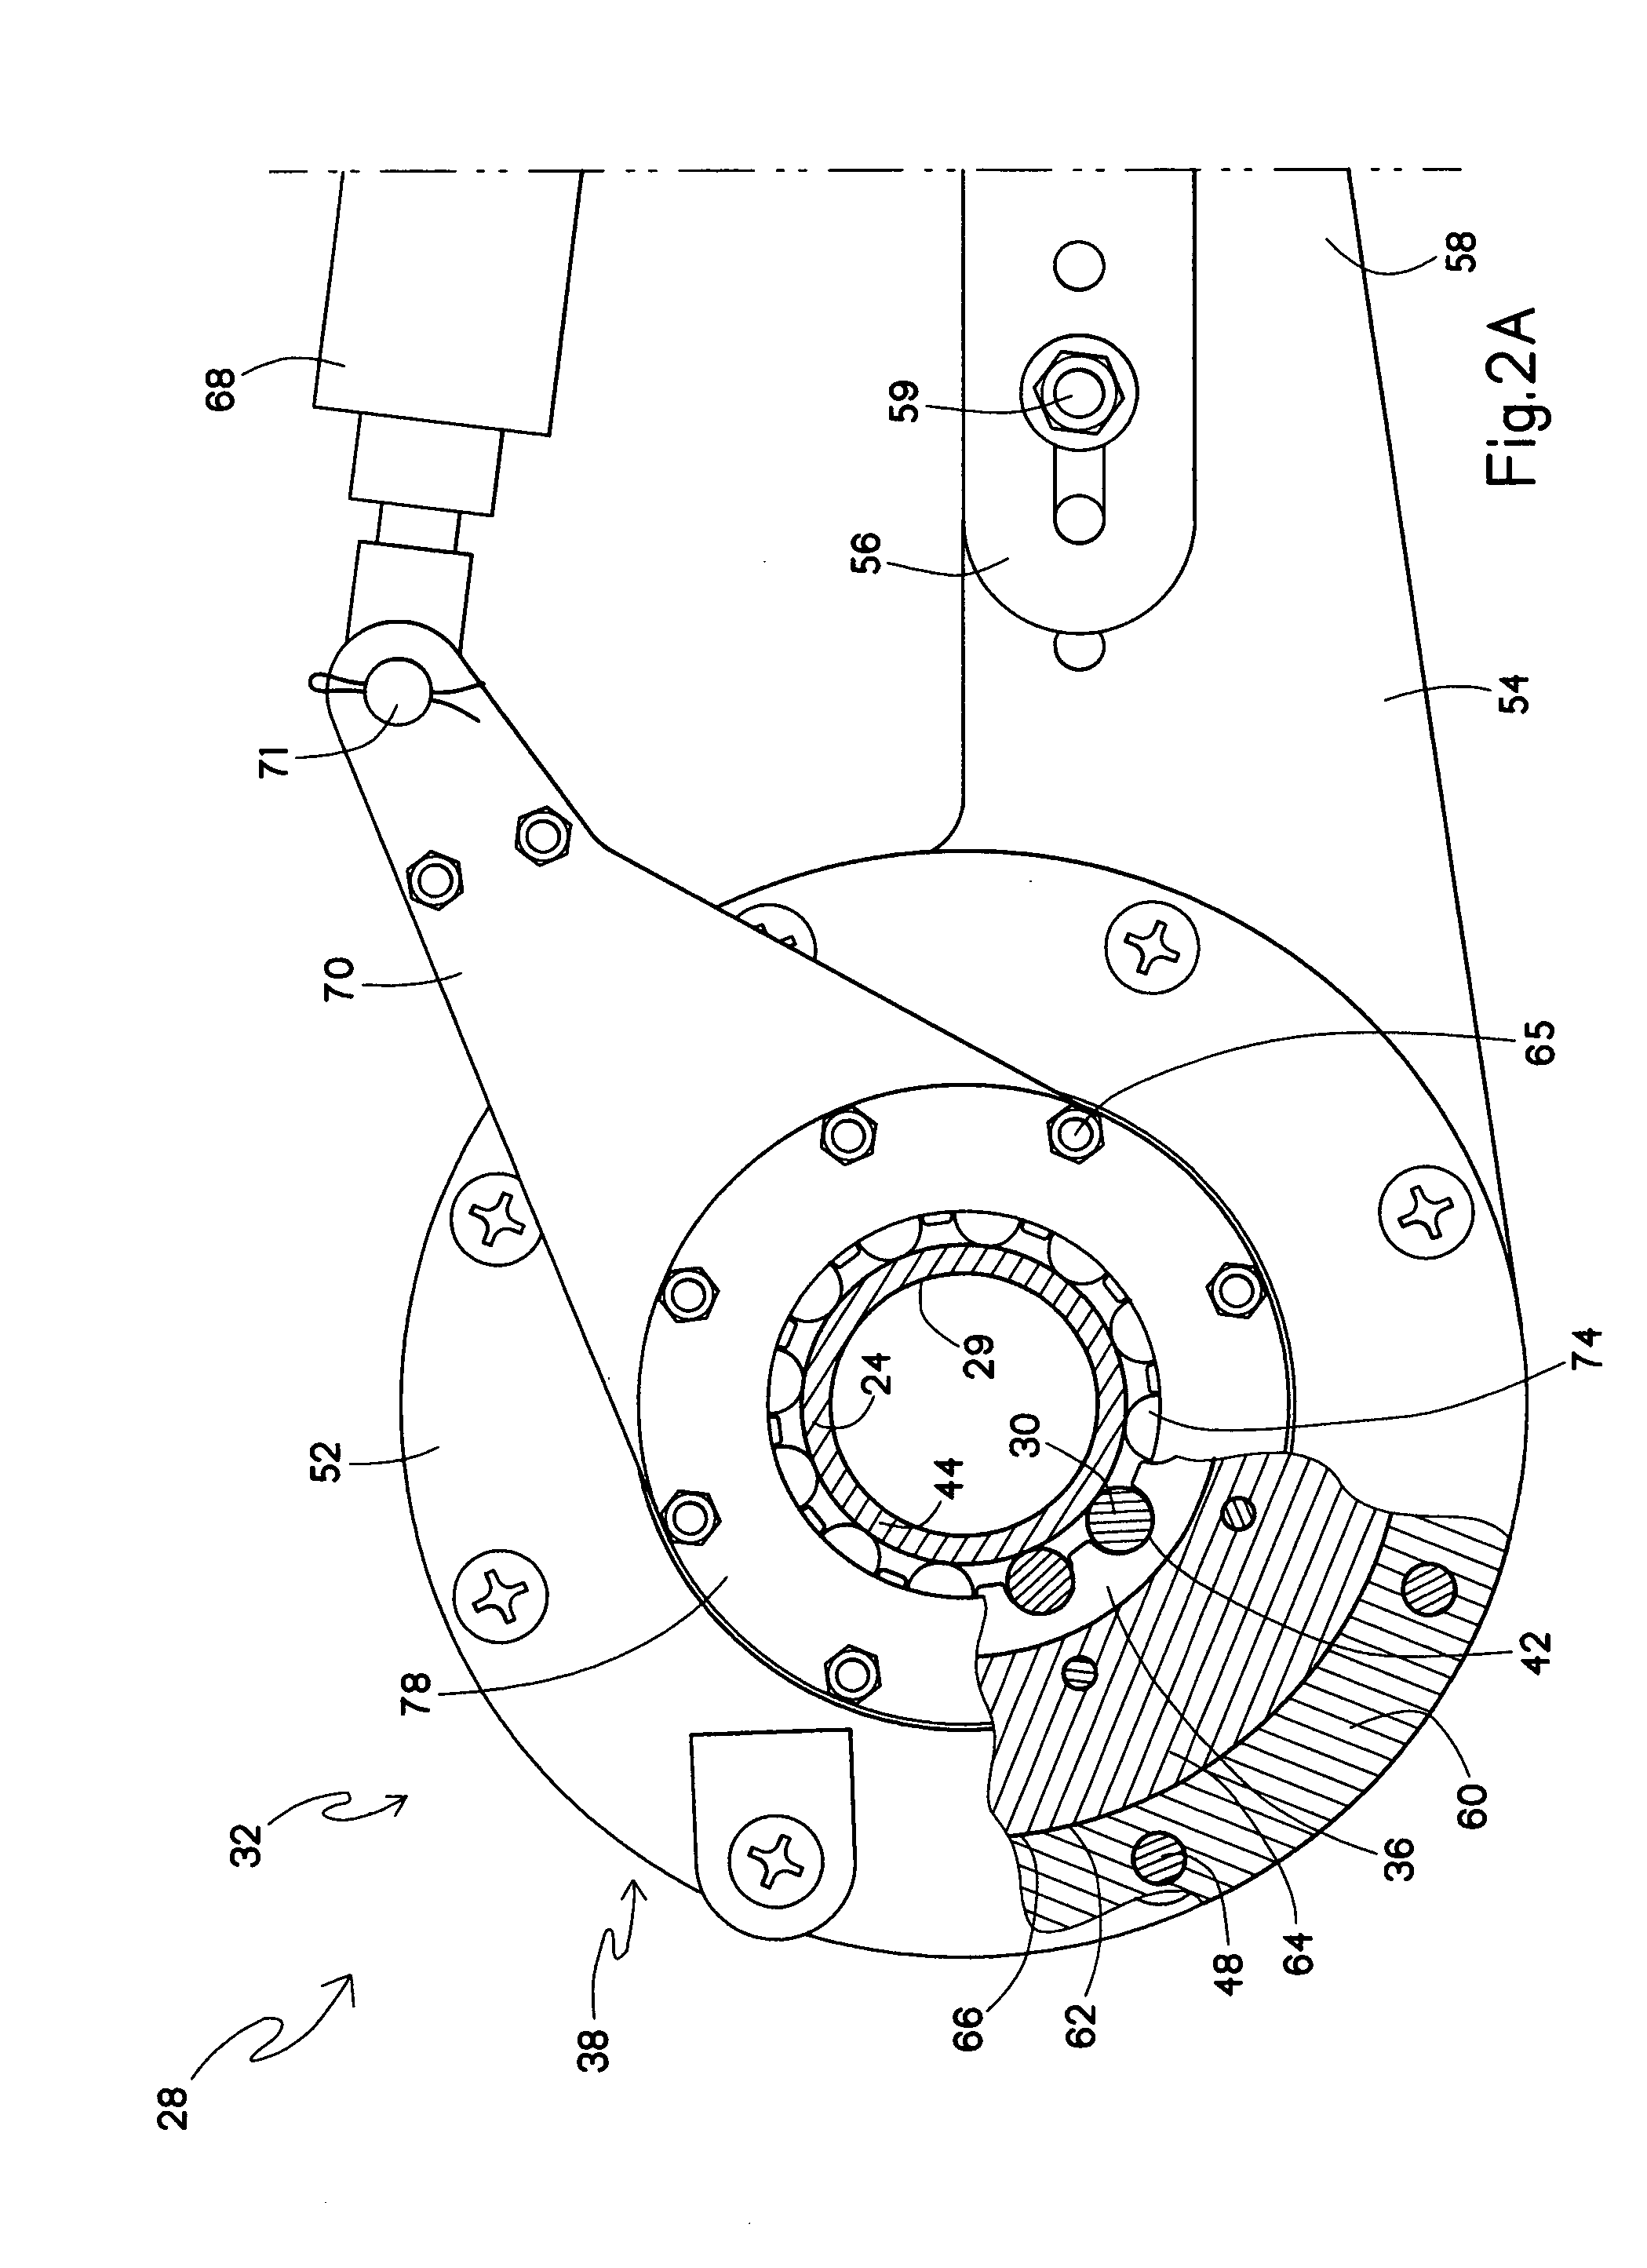 Slurry mixer constrictor valve